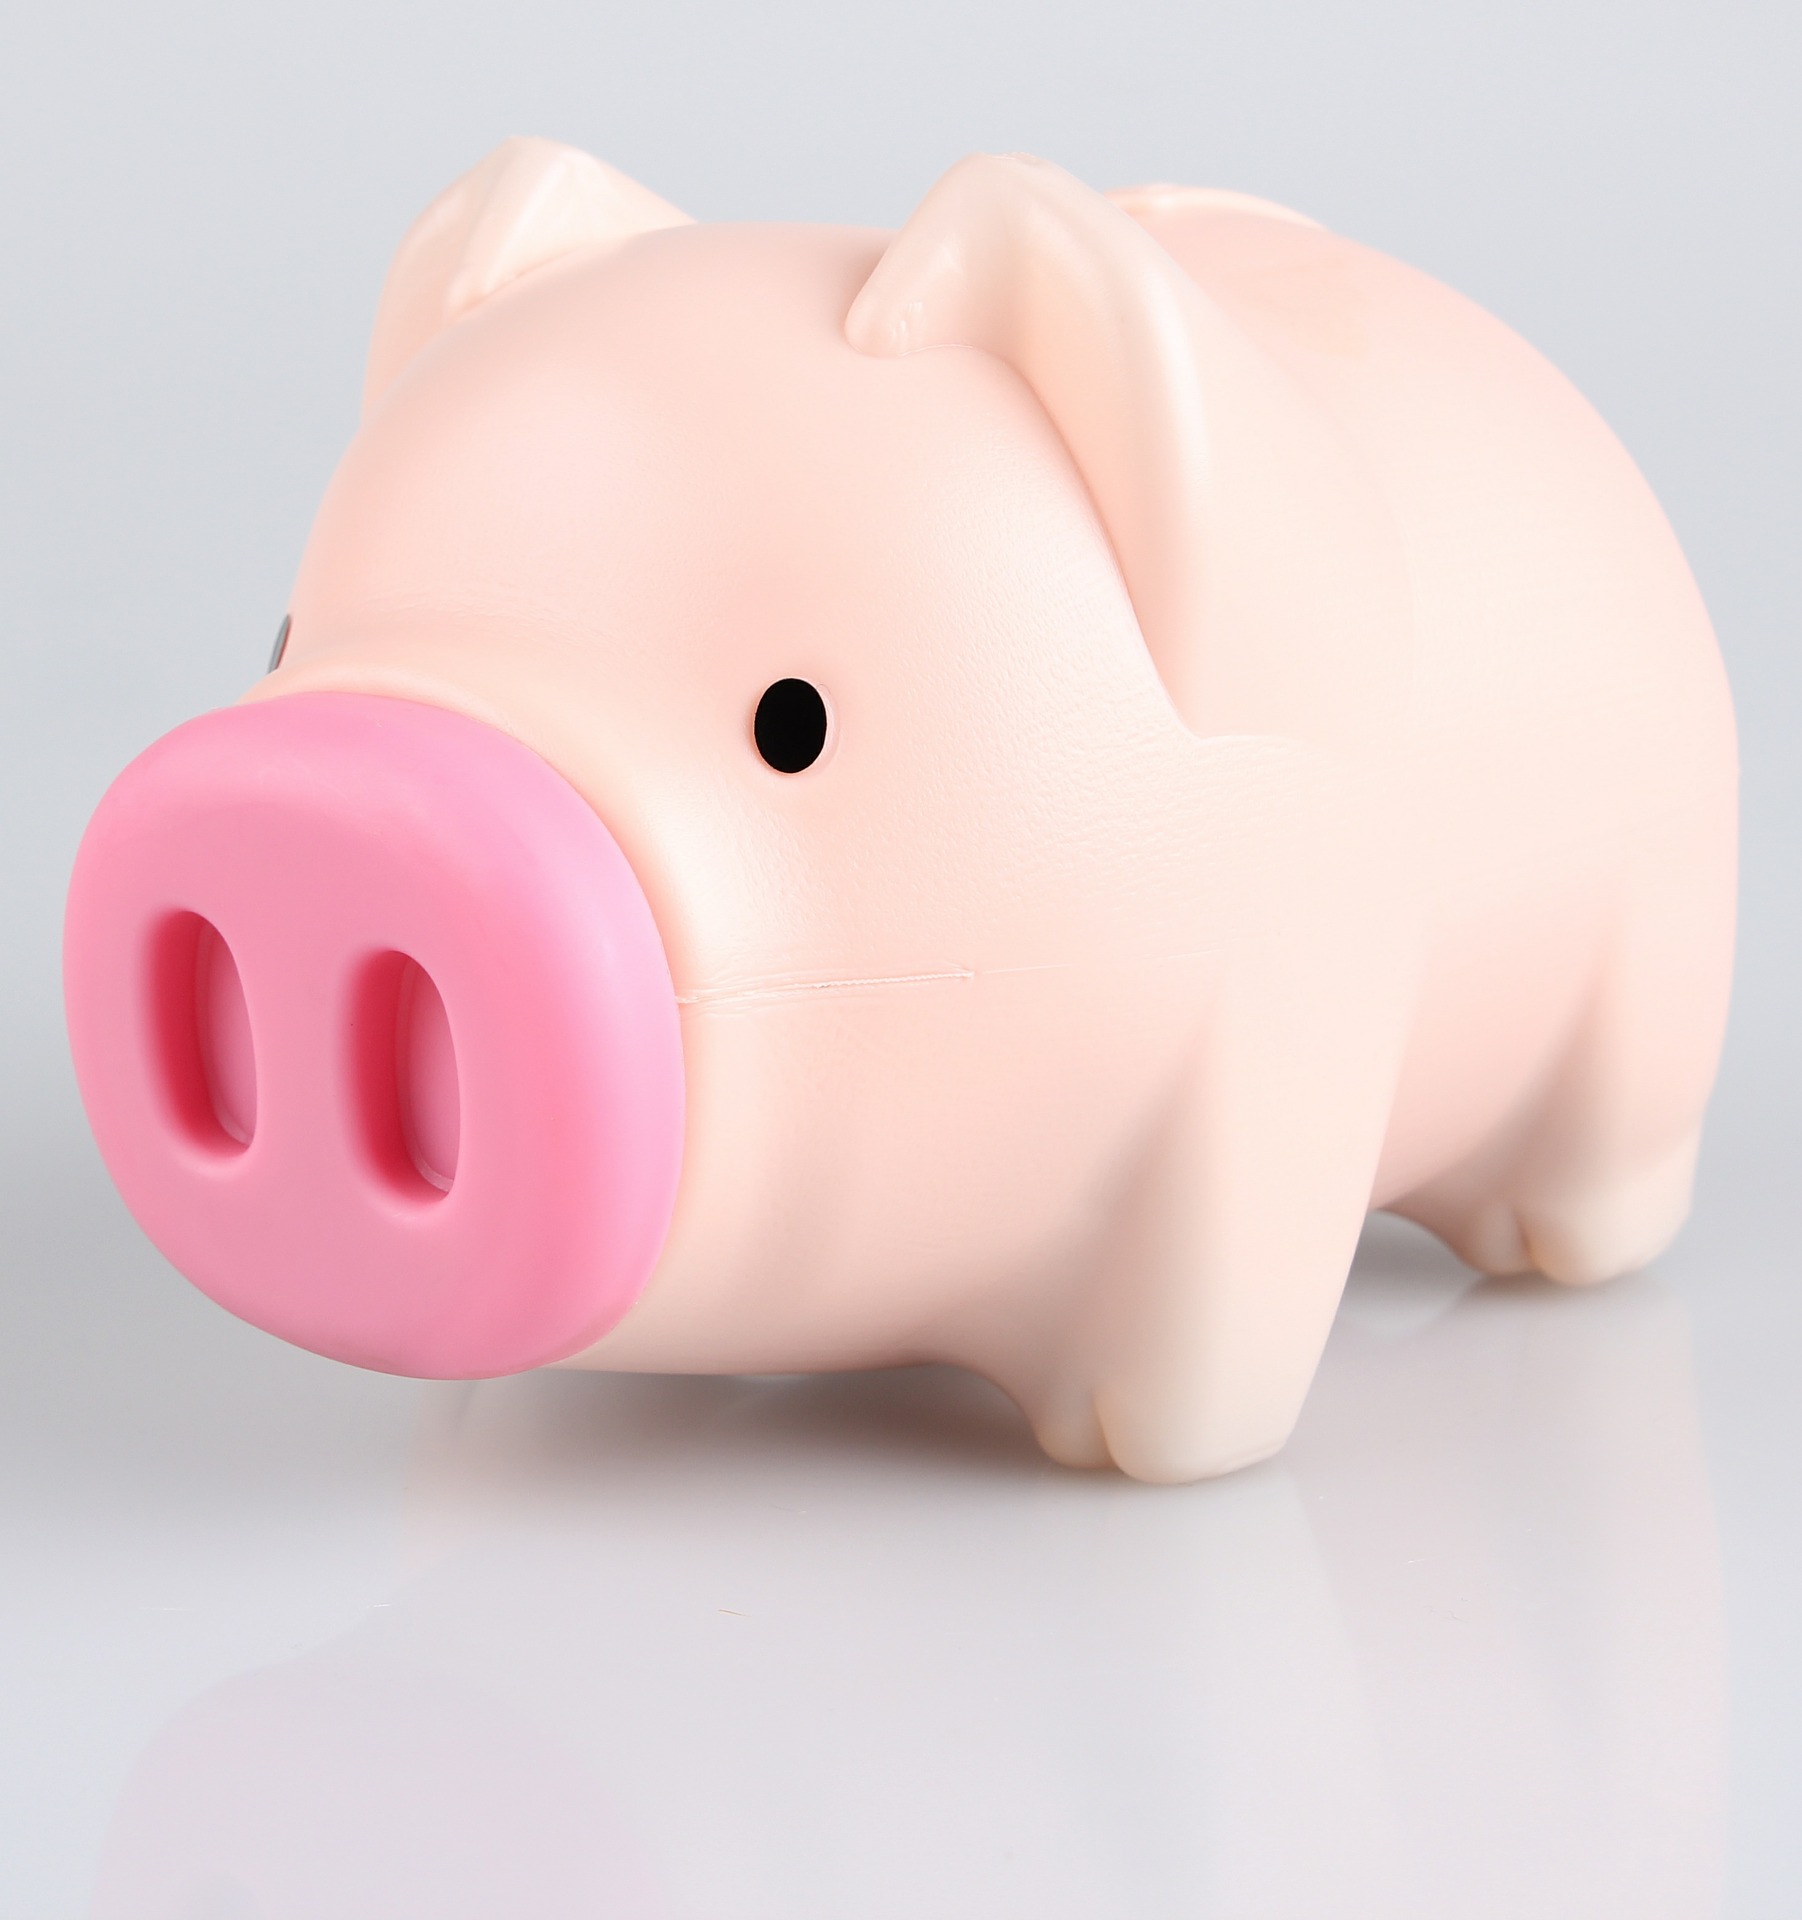 Pocket Money | Short Term Loans & Payday Loans | PiggyBank